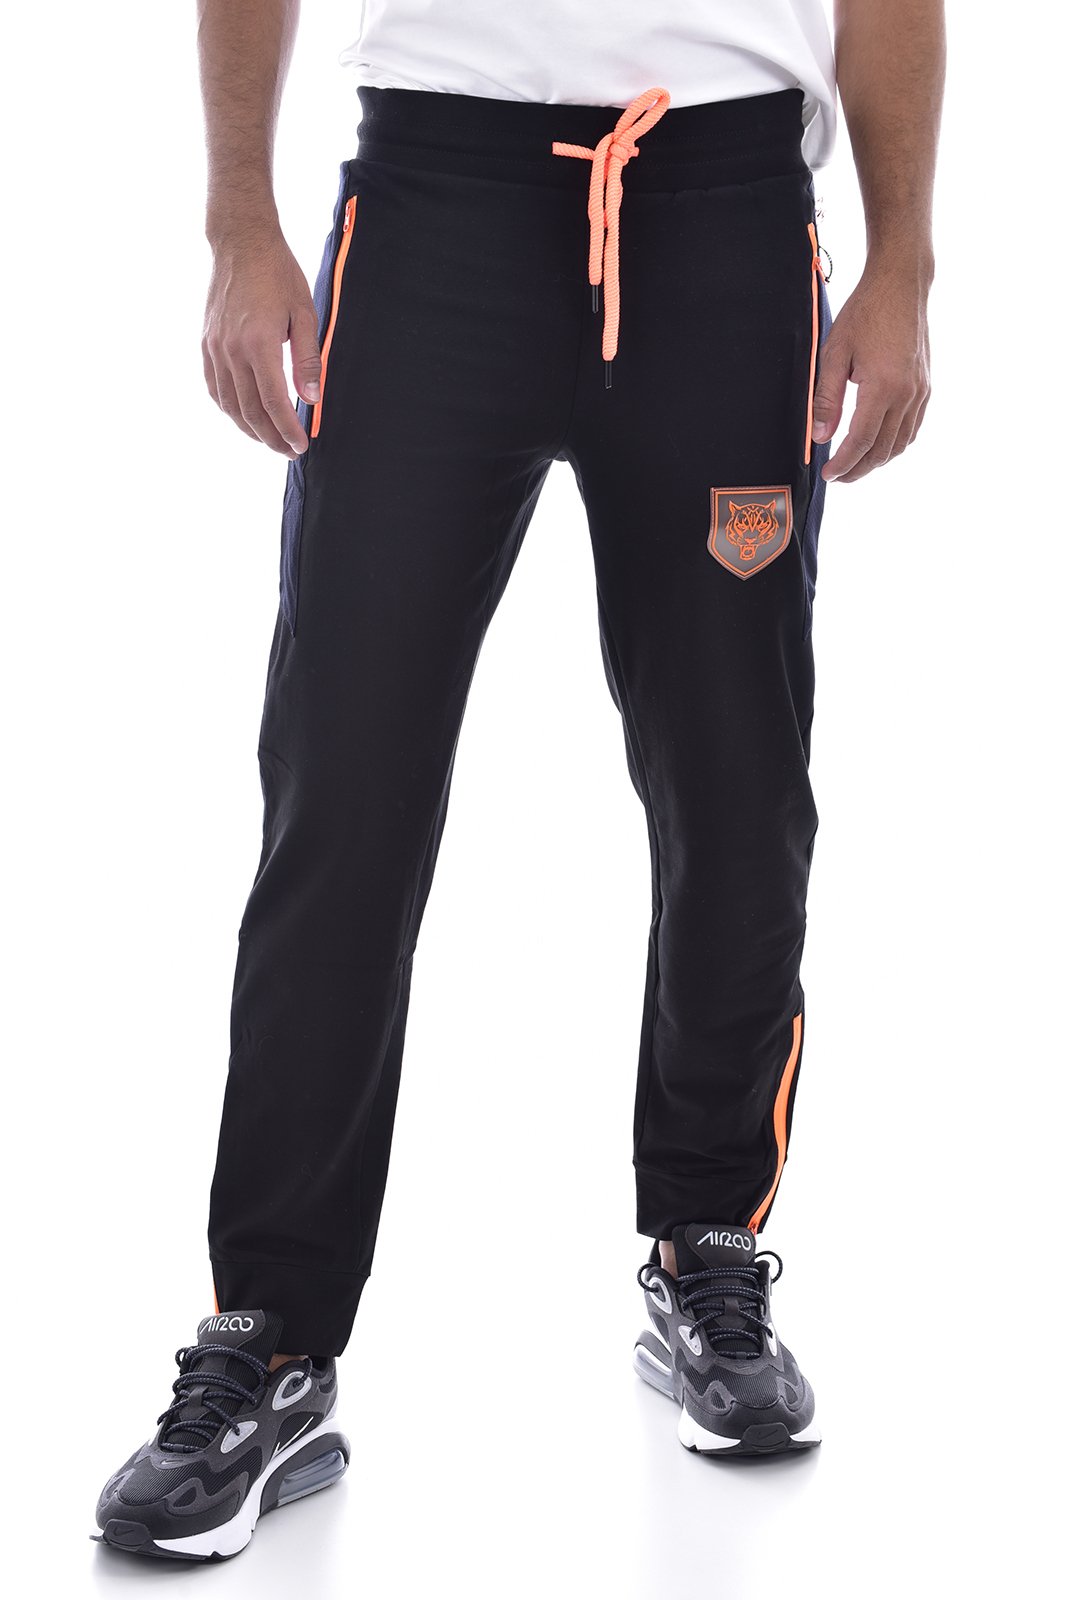 Pantalons sport/streetwear  Plein Sport MJT0460 0220 BLACK/ORANGE